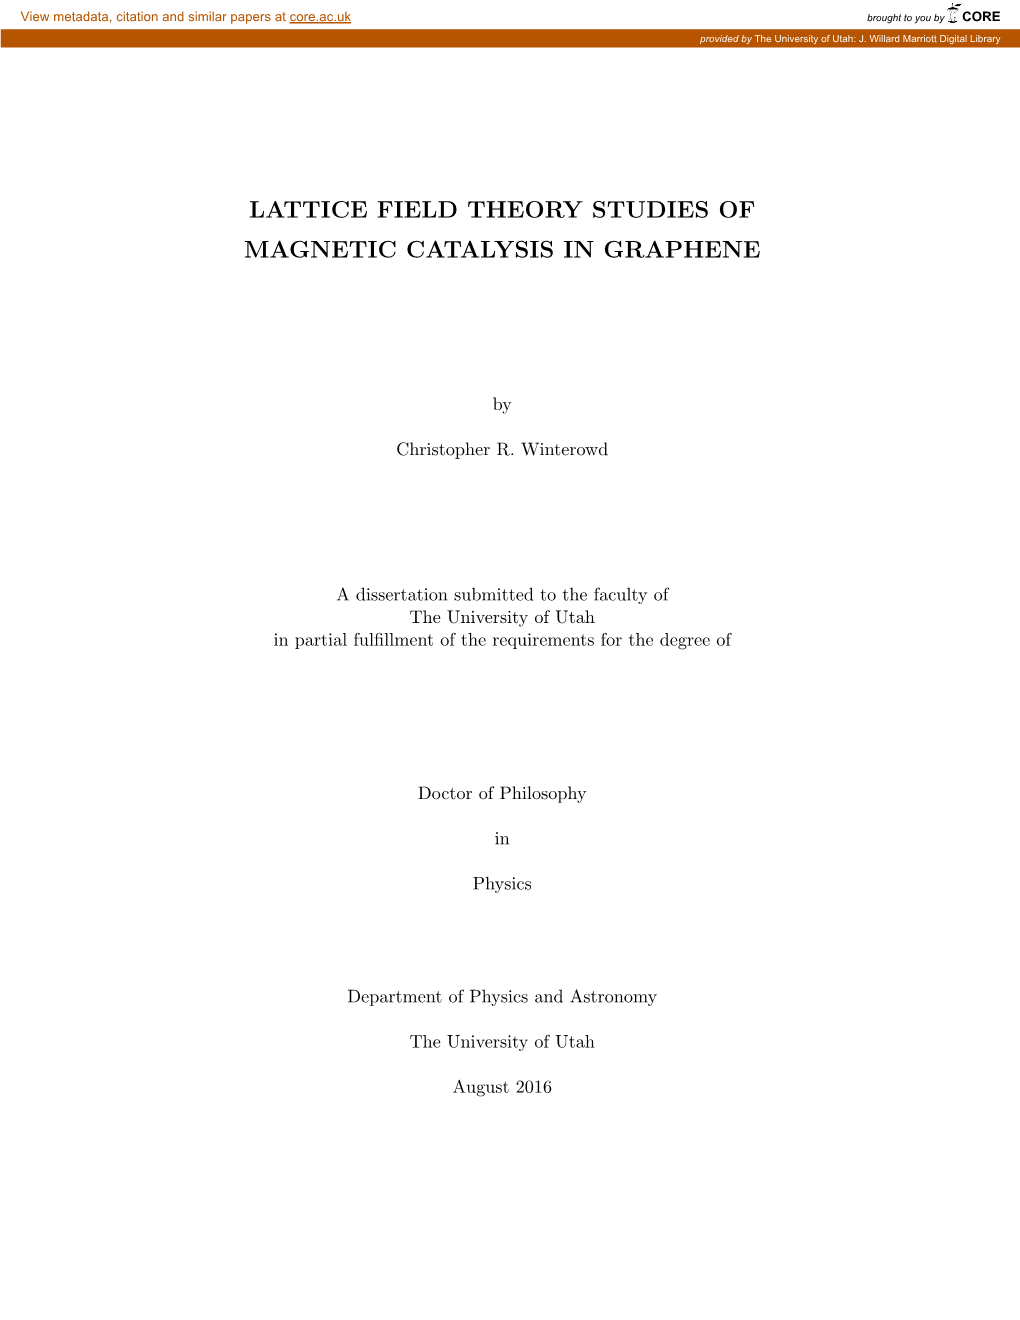 Lattice Field Theory Studies of Magnetic Catalysis in Graphene